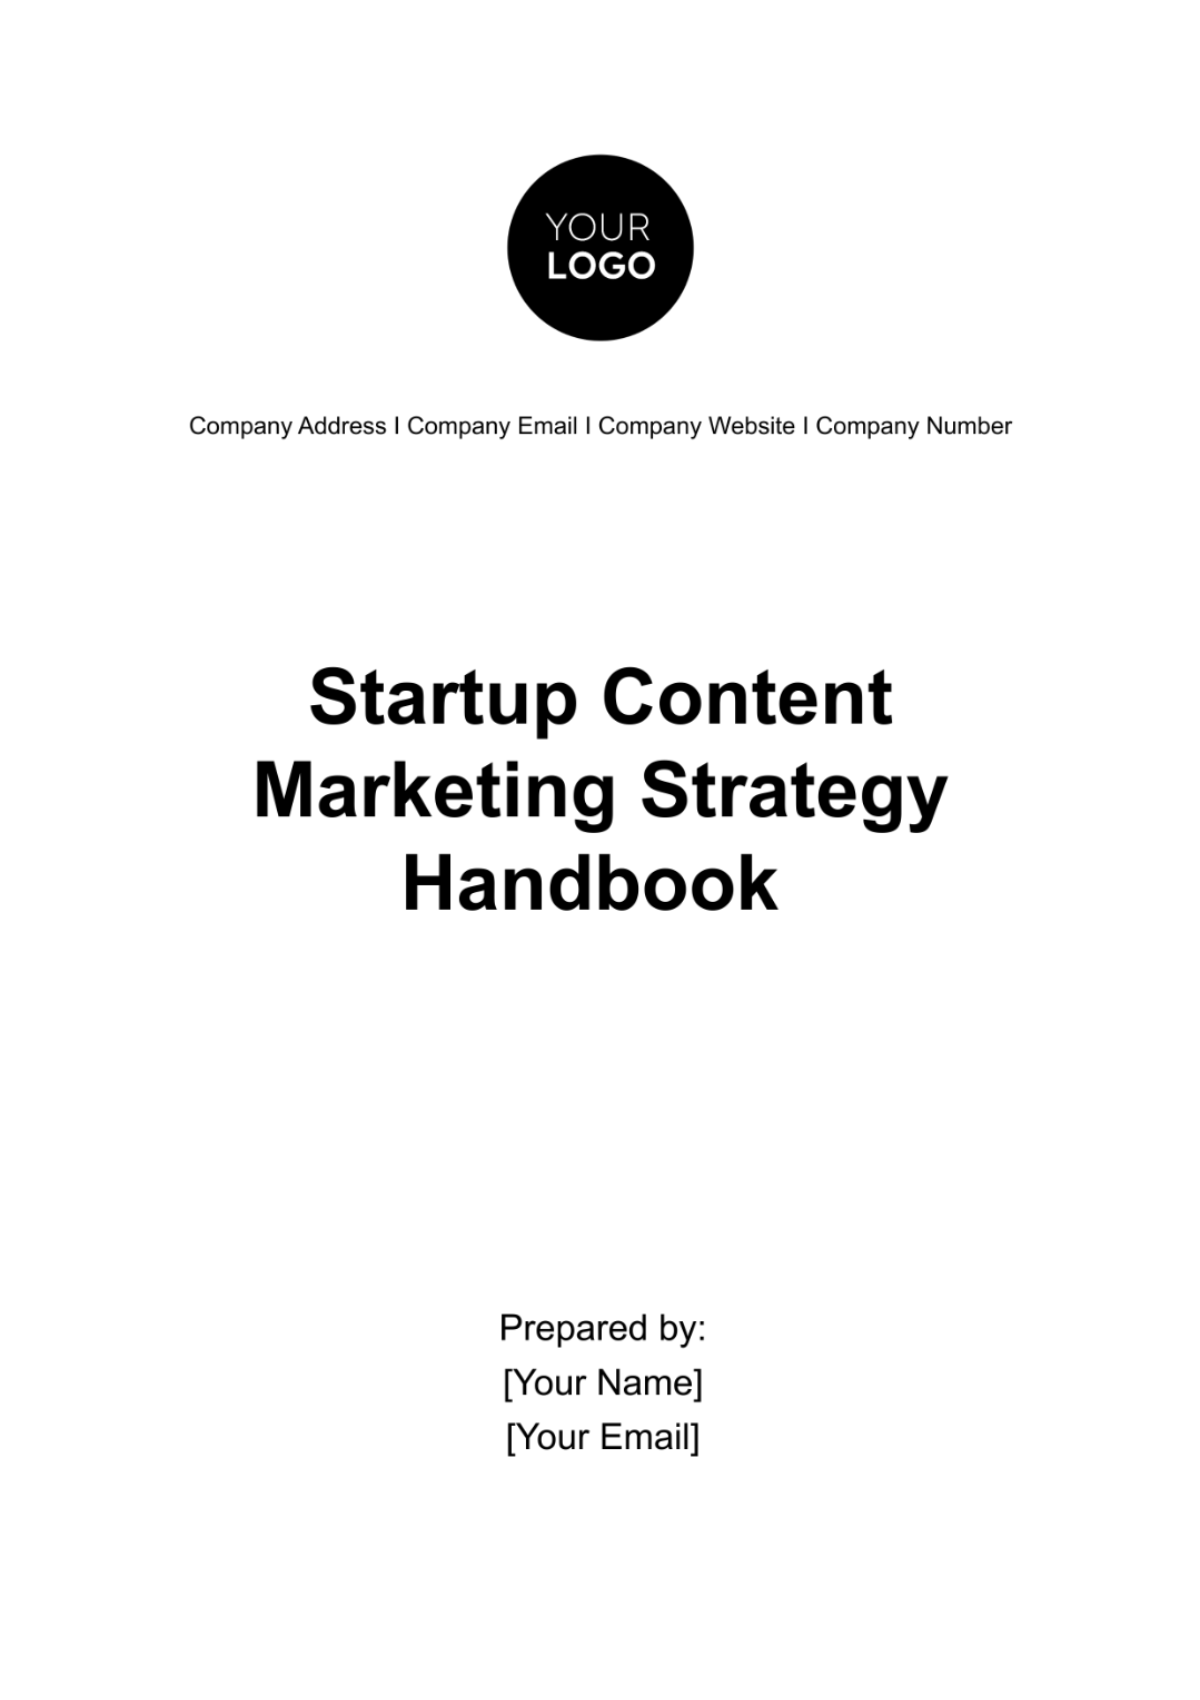 Startup Content Marketing Strategy Handbook Template